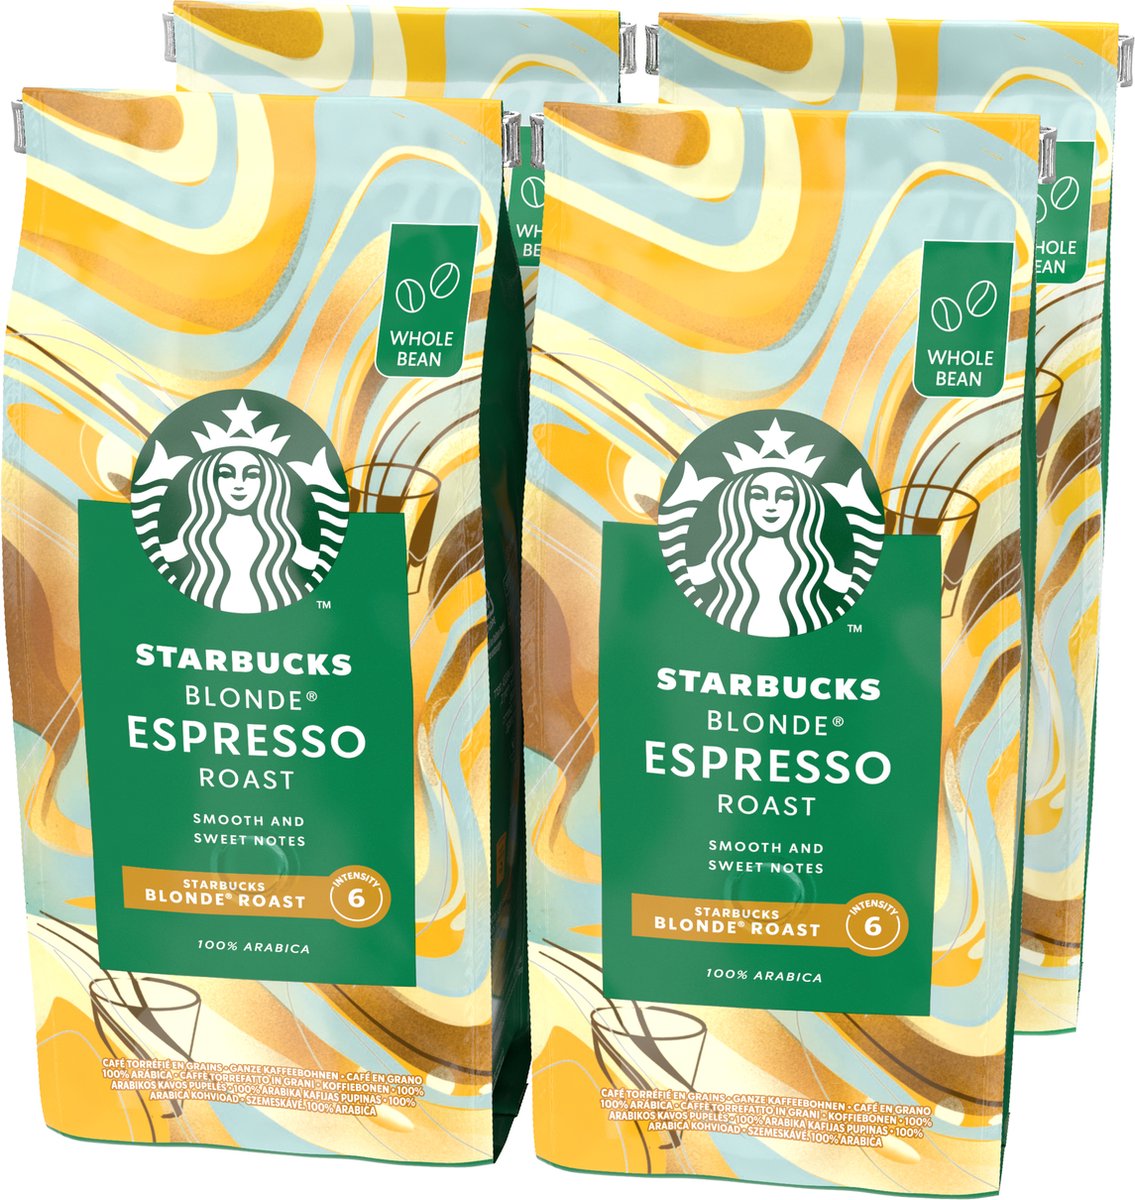 Starbucks Blonde Espresso Roast Coffee - grains de café - 1